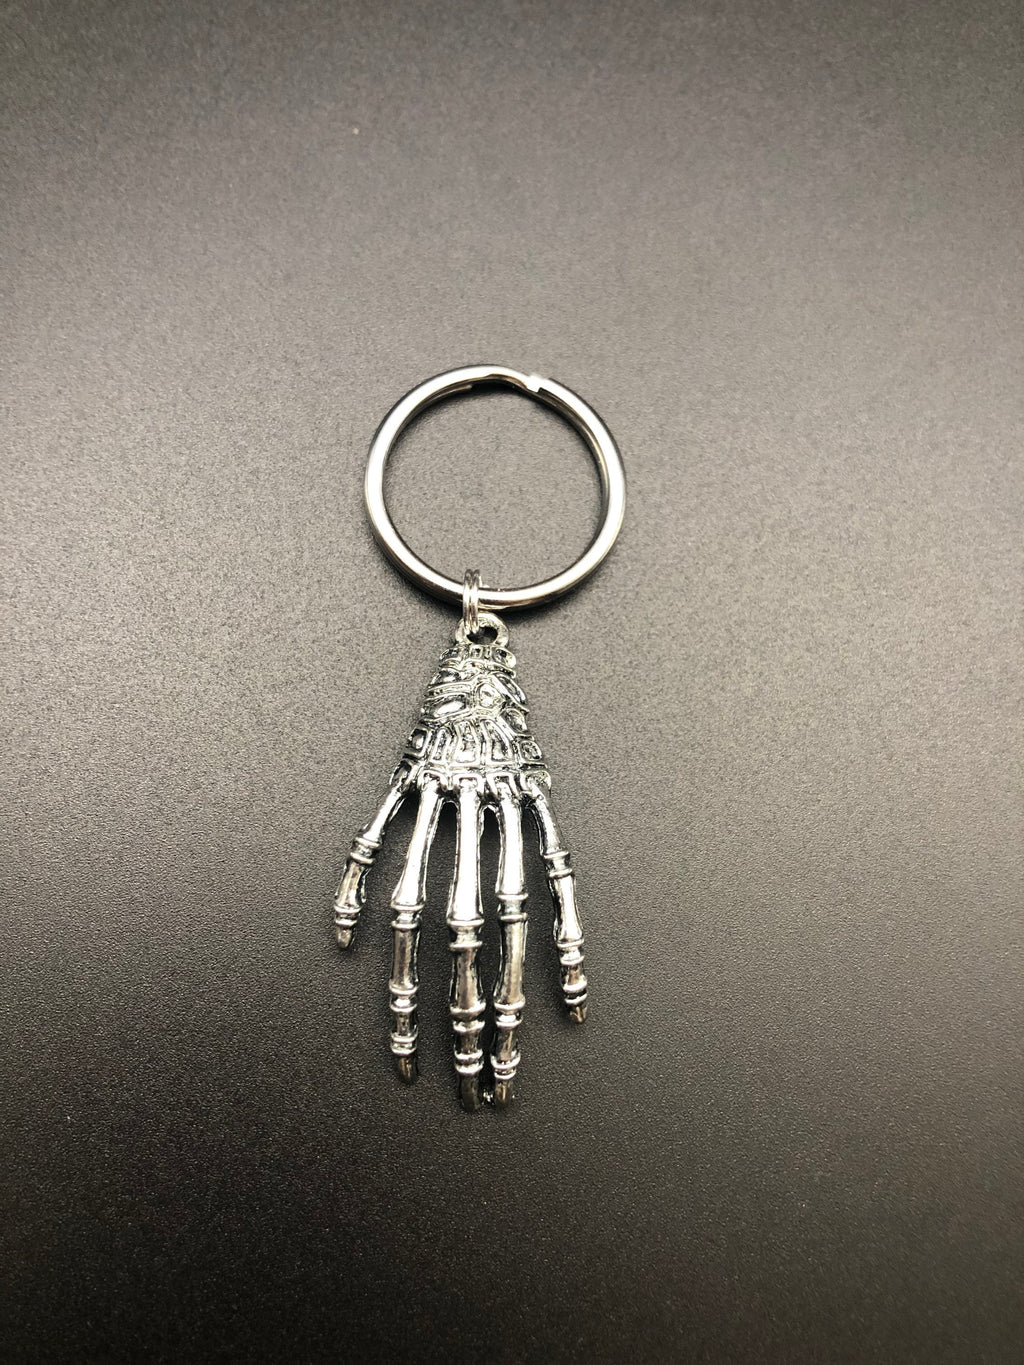 Skeleton Hand Keychain, Xray Tech, Bones, Wrist